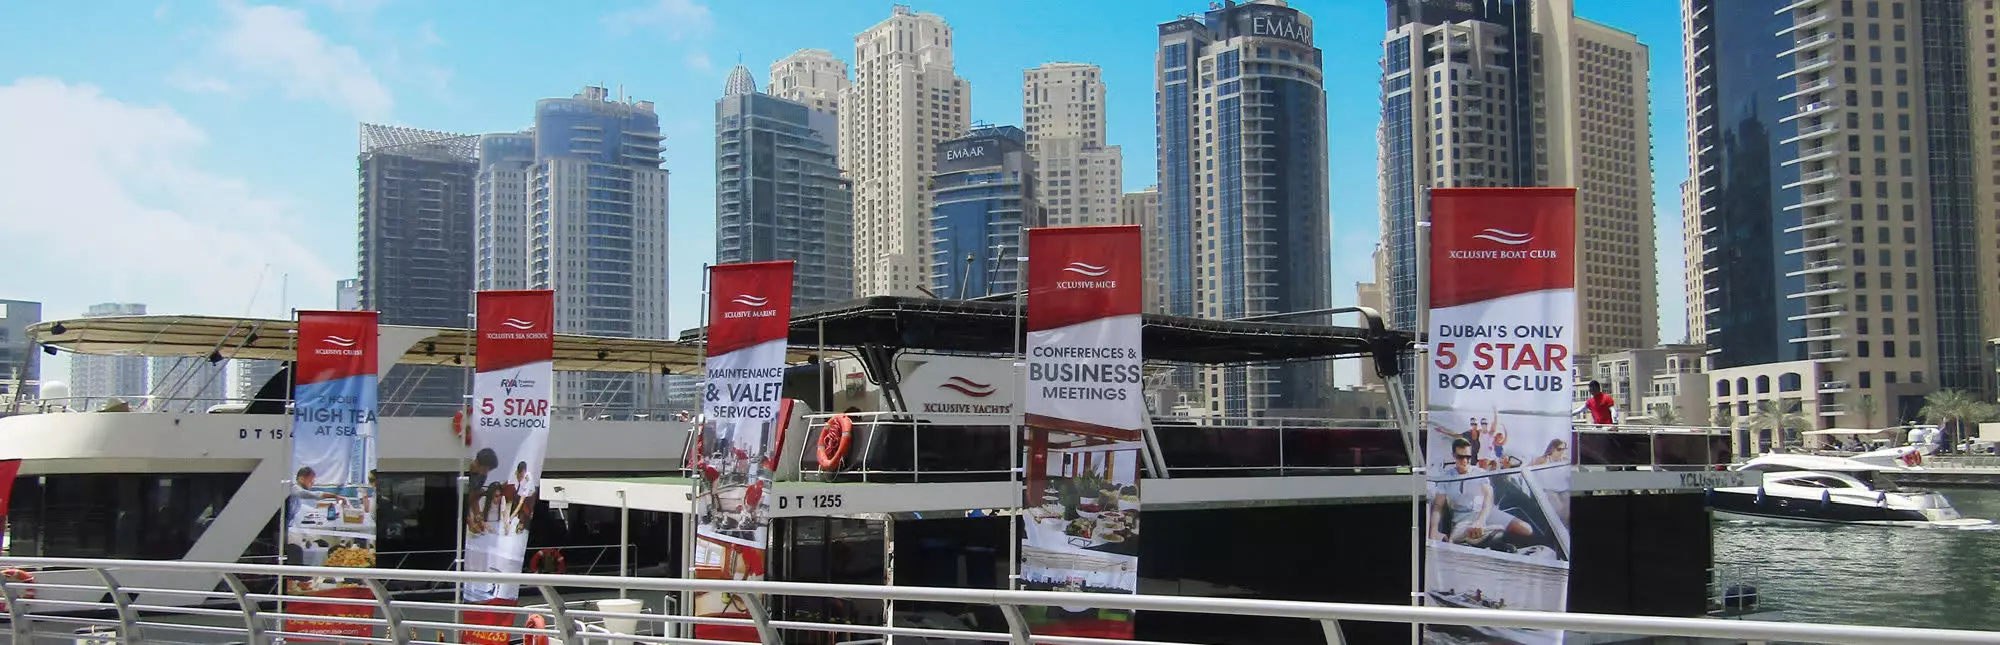 Boat Cruise in Dubai